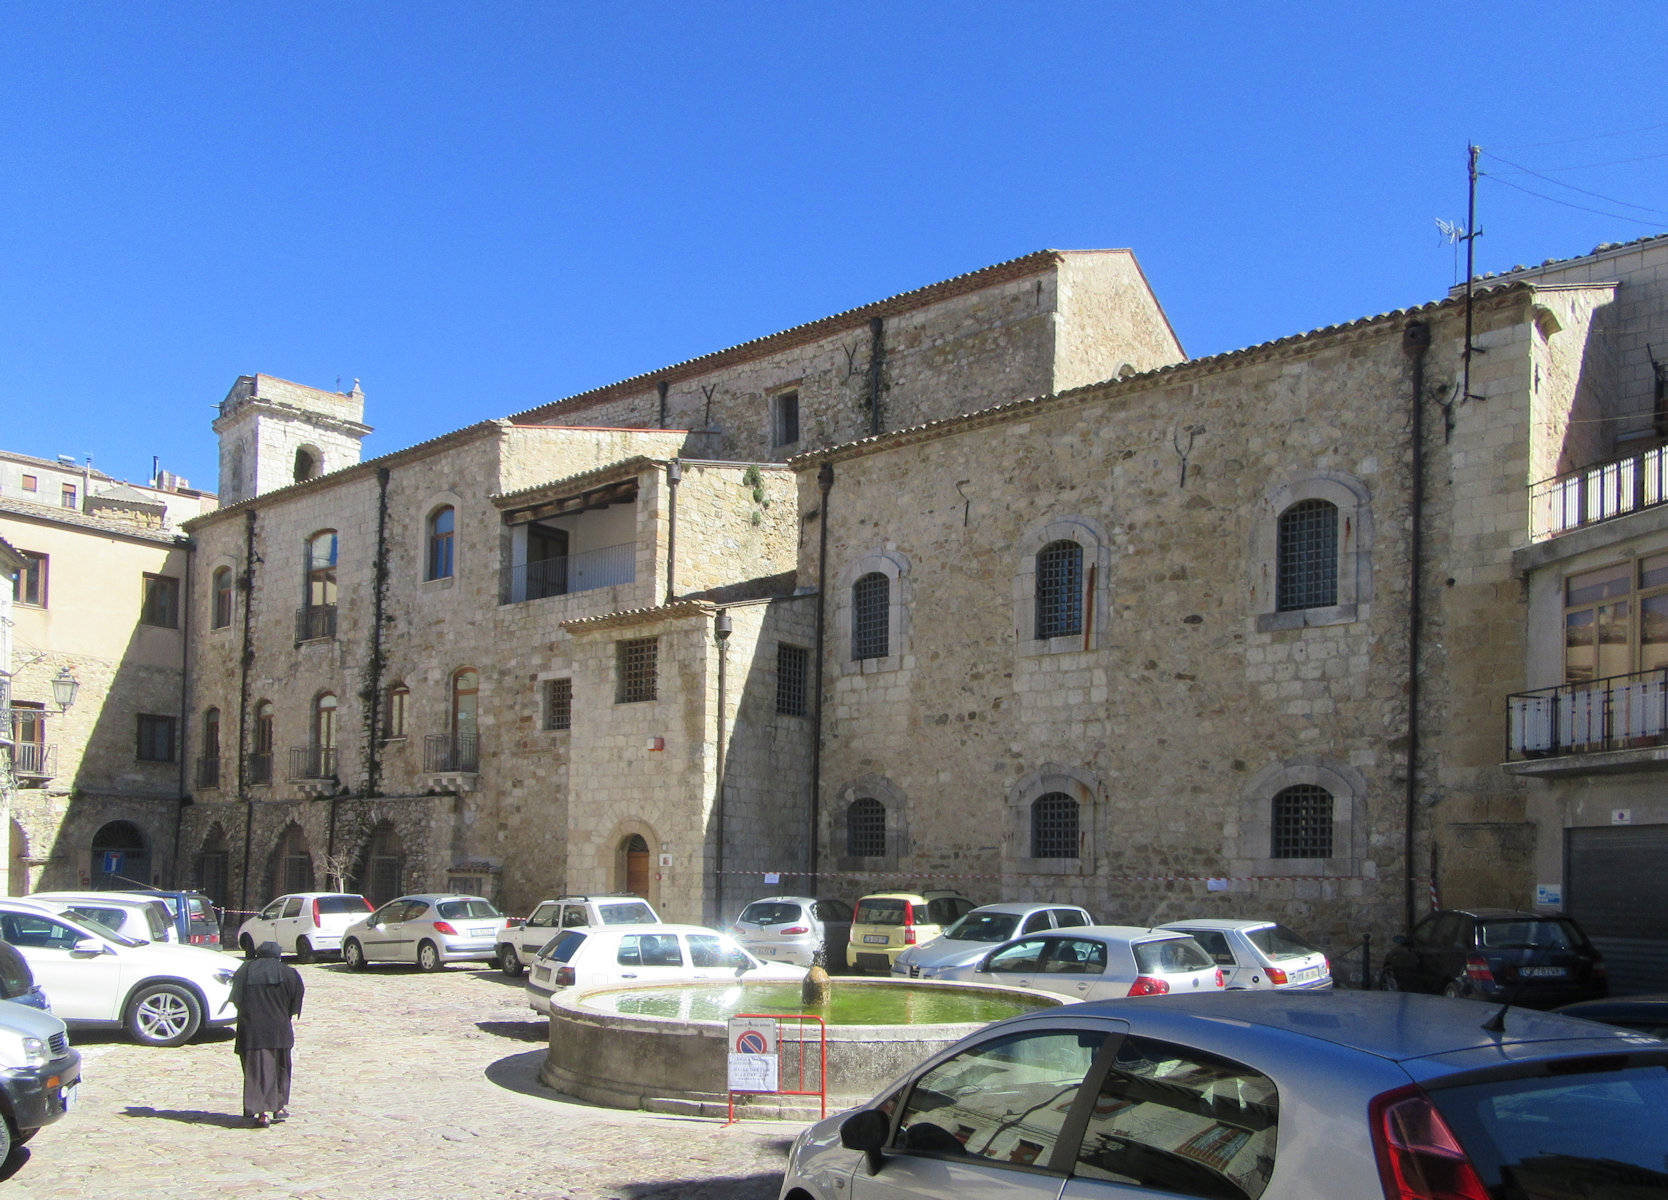 ehemaliges Kloster der Franziskaner in Petralia Sottana